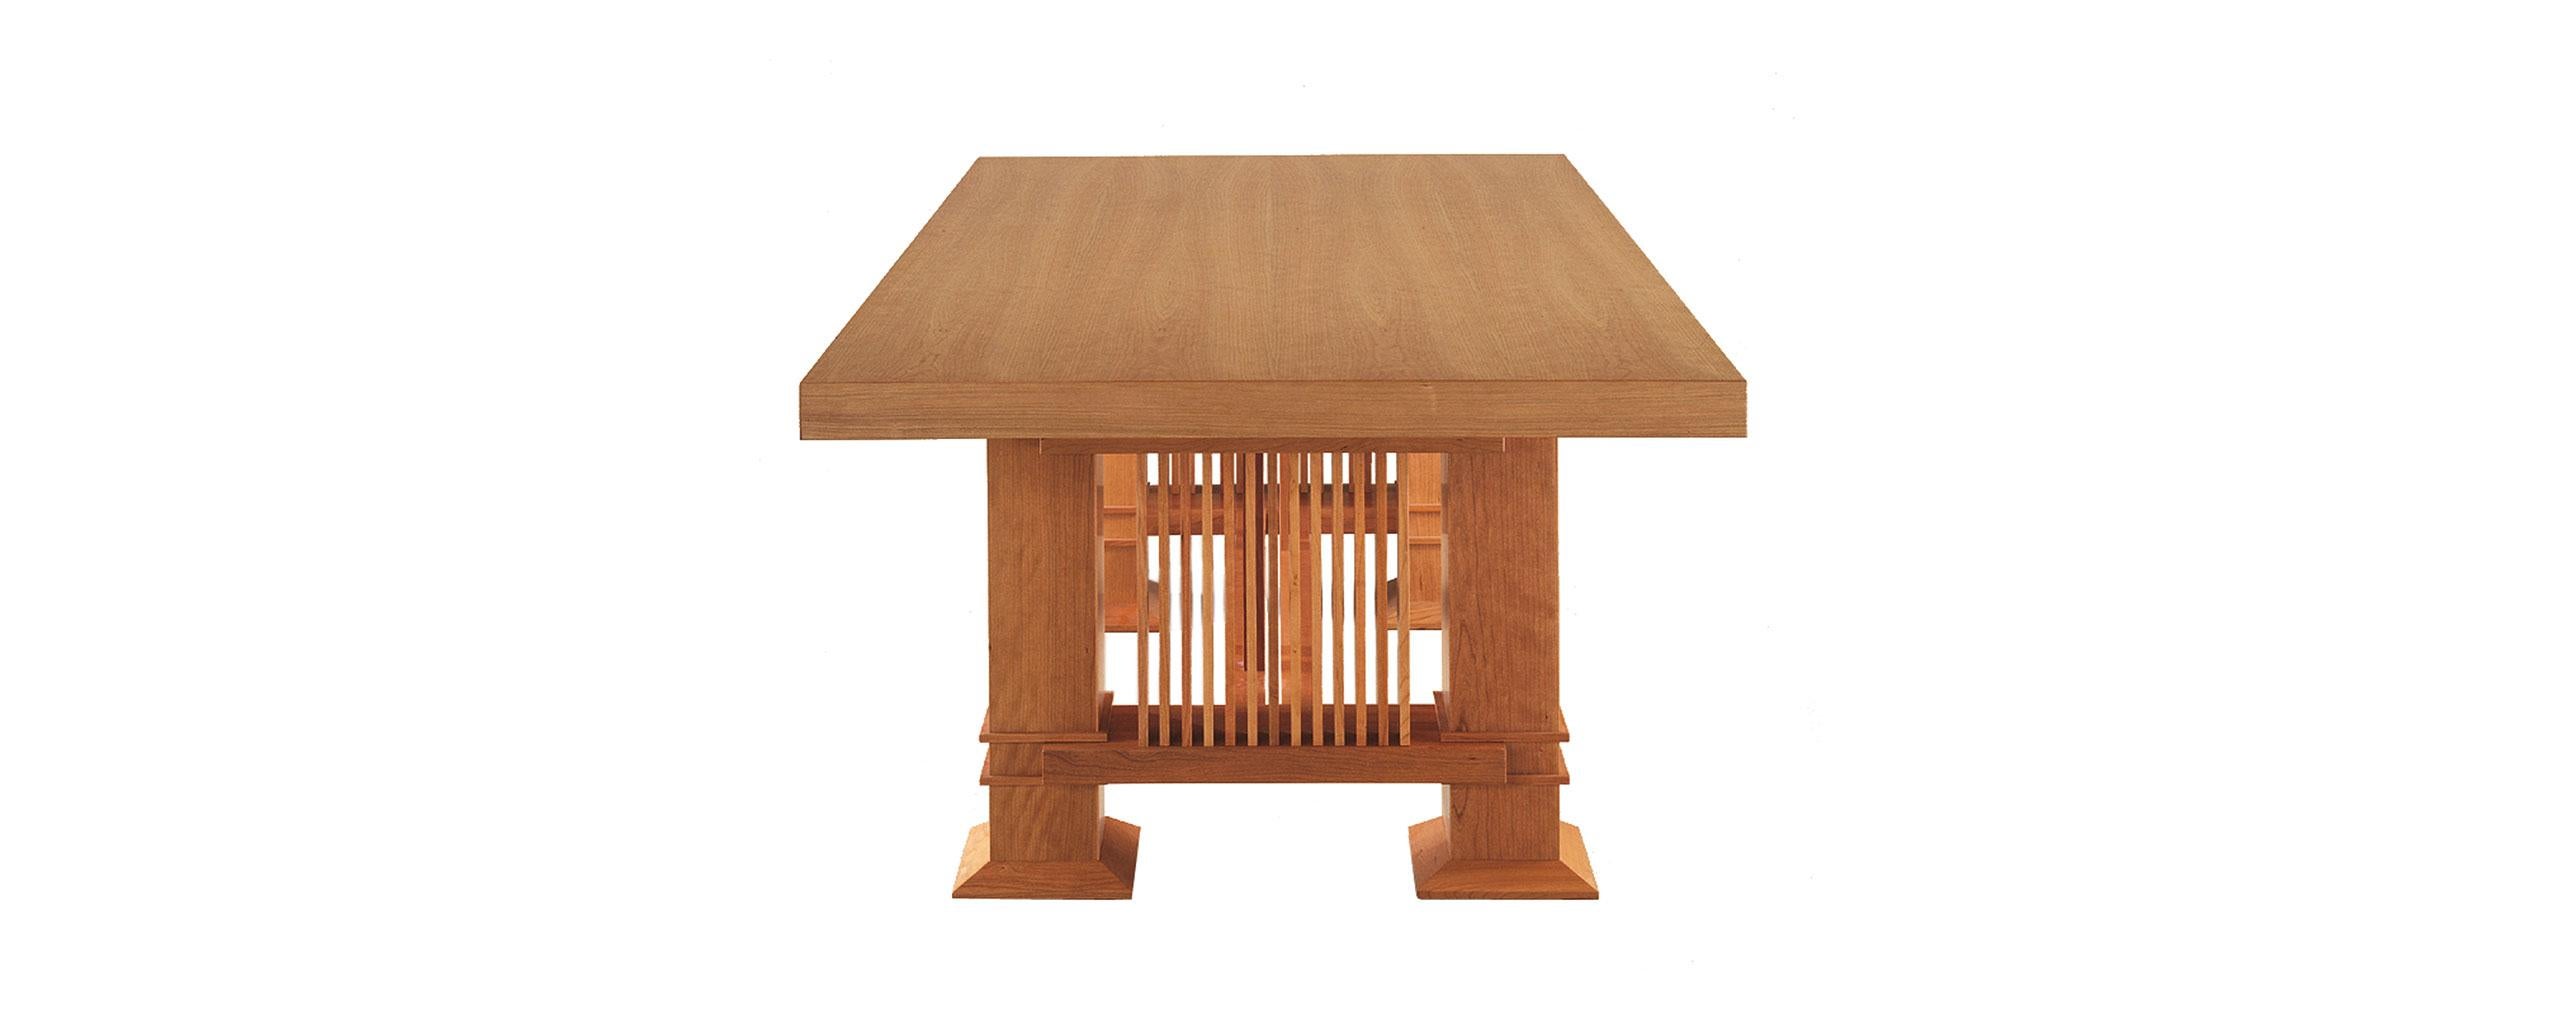 Frank Lloyd Wright Allen Table by Cassina 1